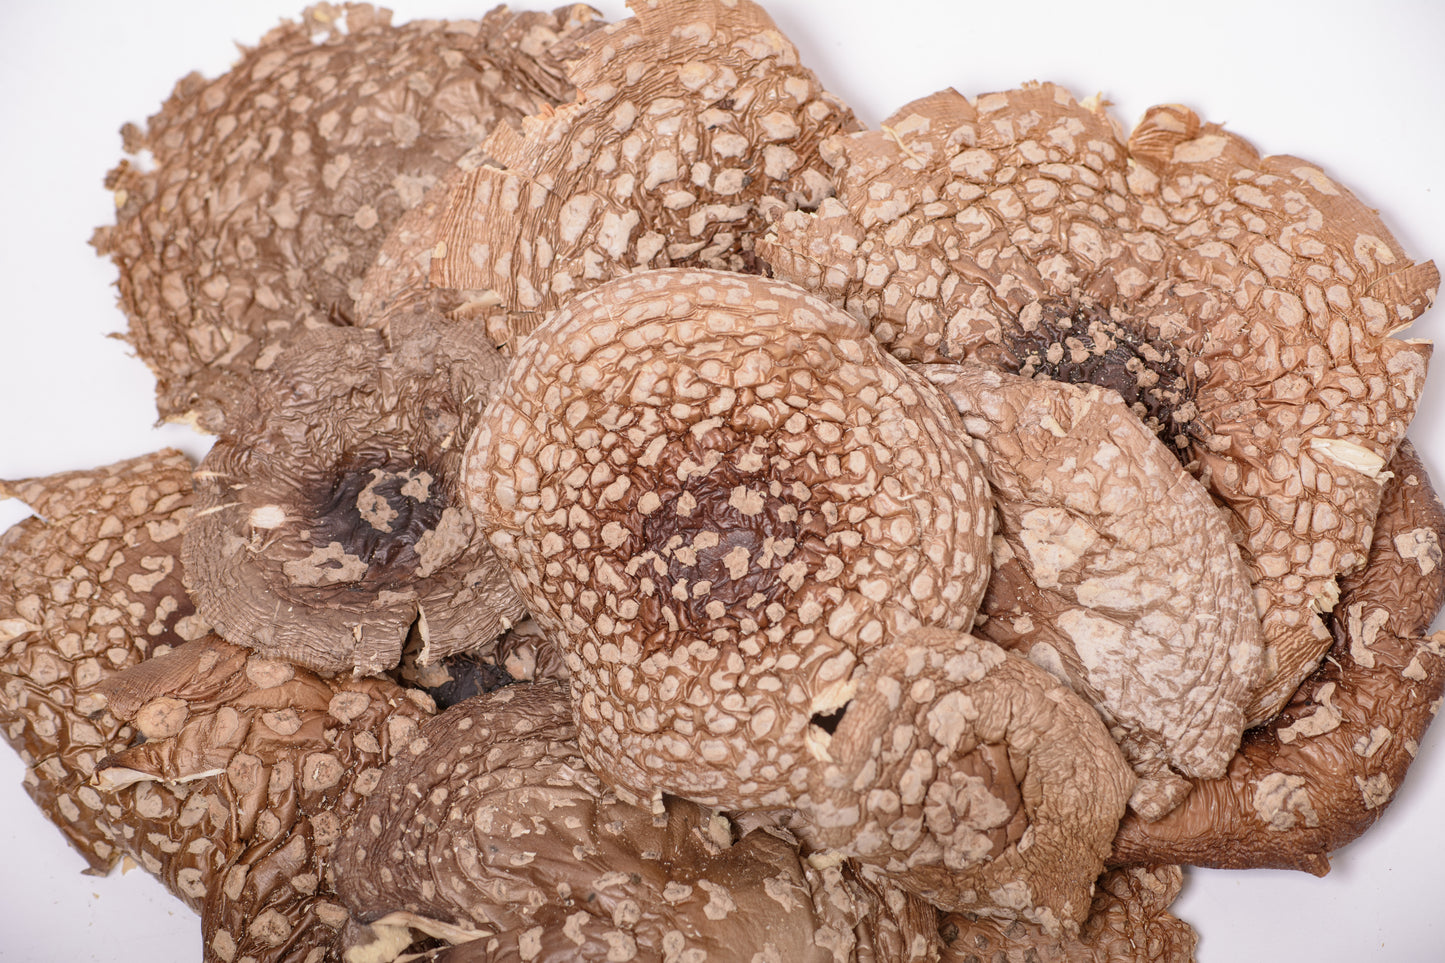 Dried amanita muscaria mushrooms for sale - mushroomholistic.com